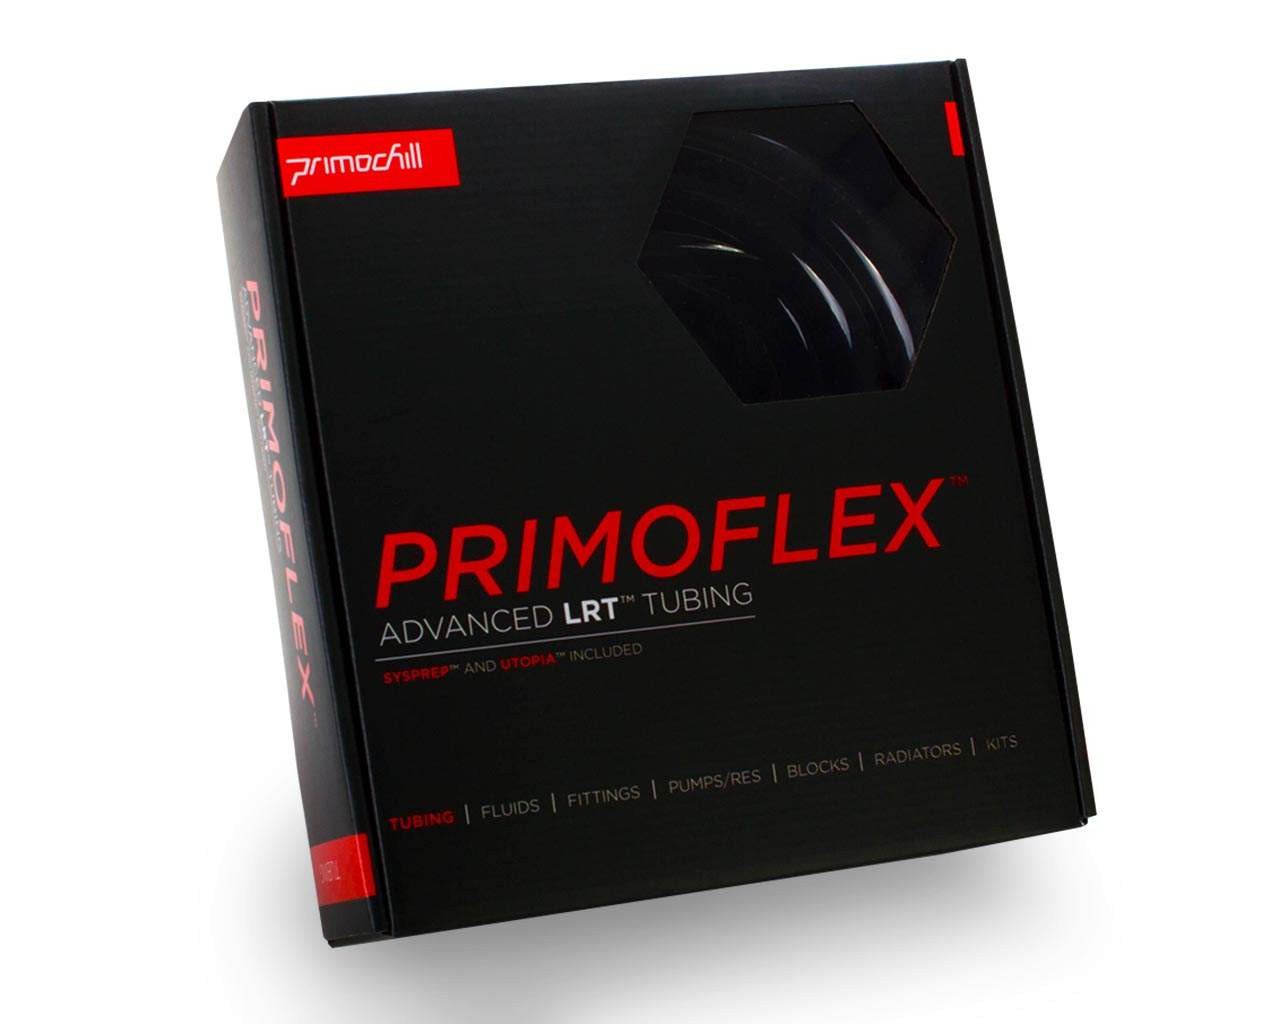 PrimoFlex Advanced LRT Soft Flexible Tubing - 7/16in.ID x 5/8in.OD, 10 feet - PrimoChill - KEEPING IT COOL Onyx Black